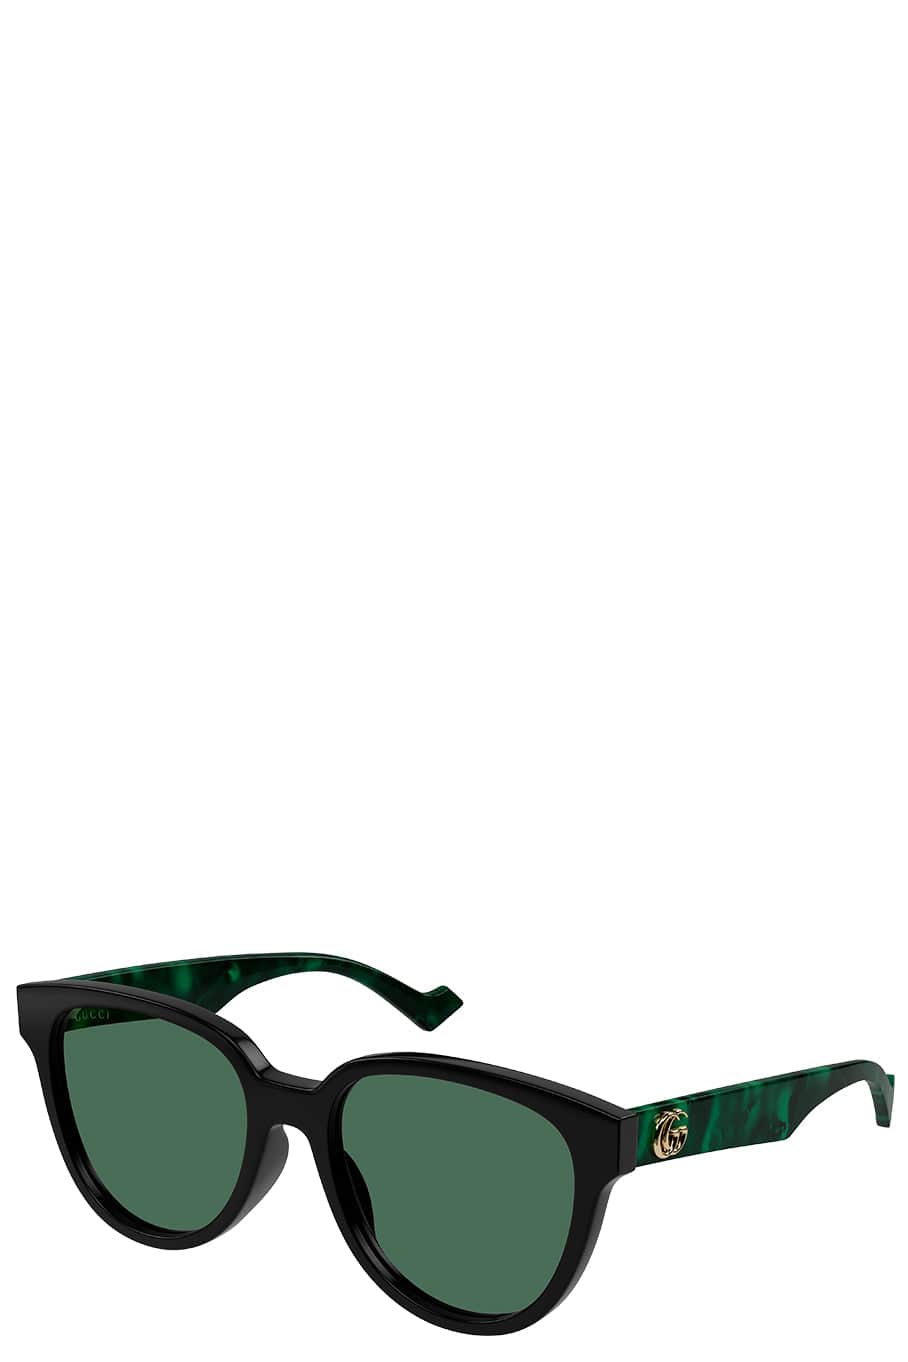 GUCCI-Round Frame Sunglass-BLACK GREEN